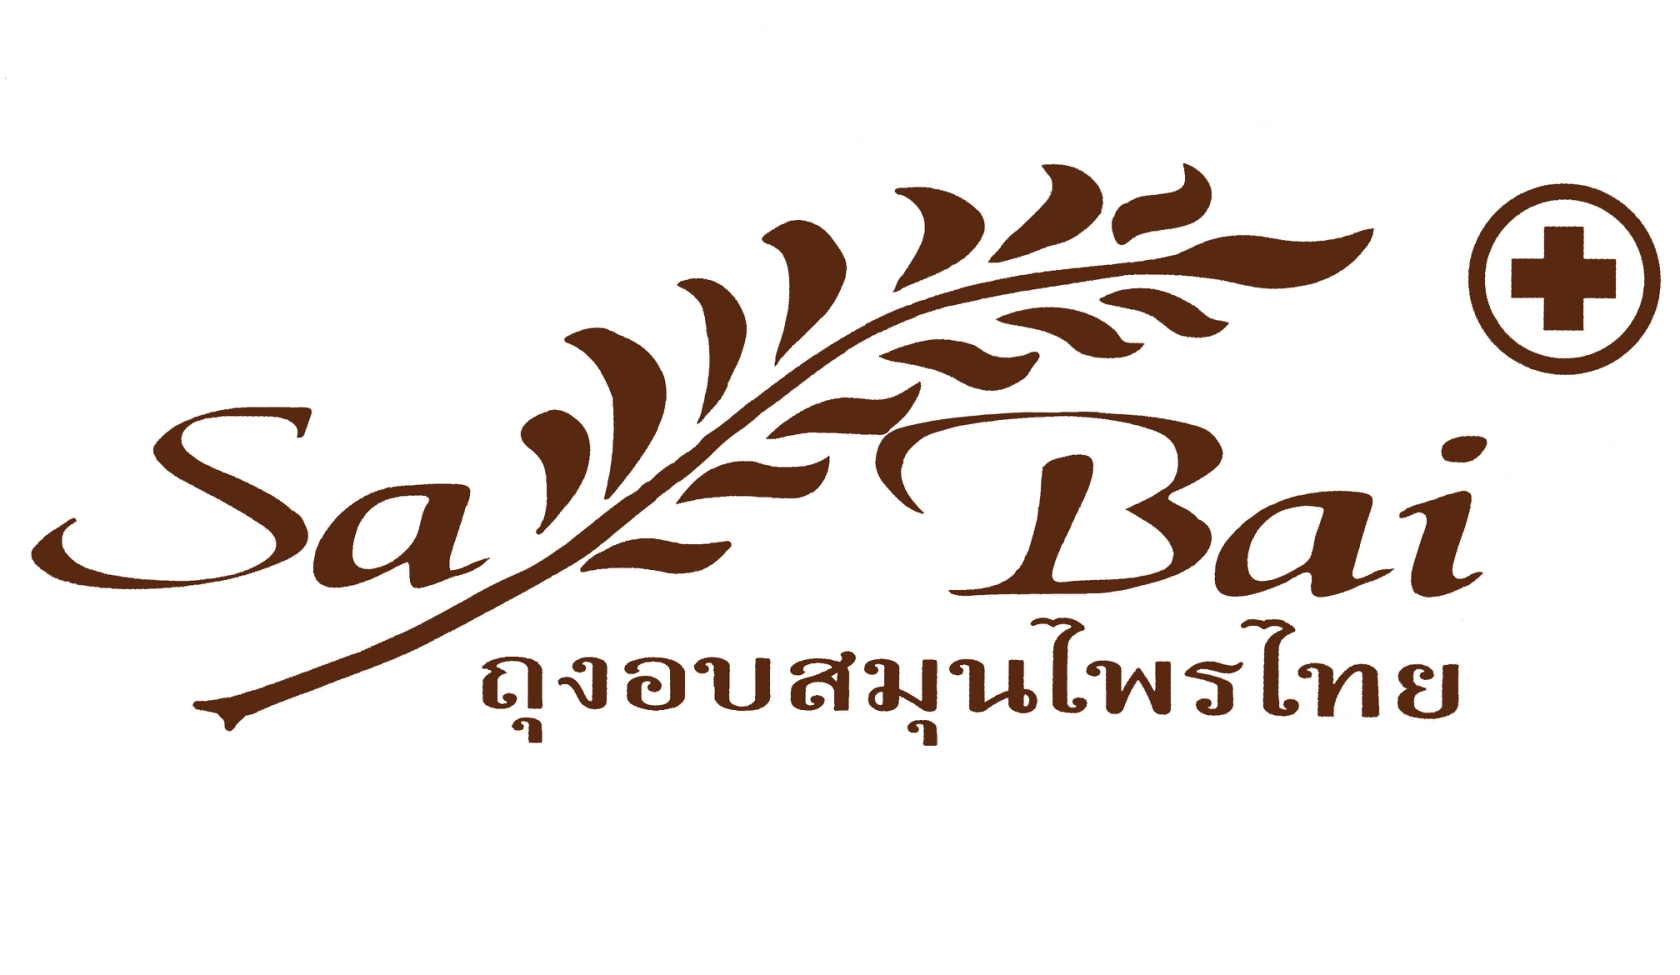 Sabai Herb : ถุงอบสมุนไพรไทย